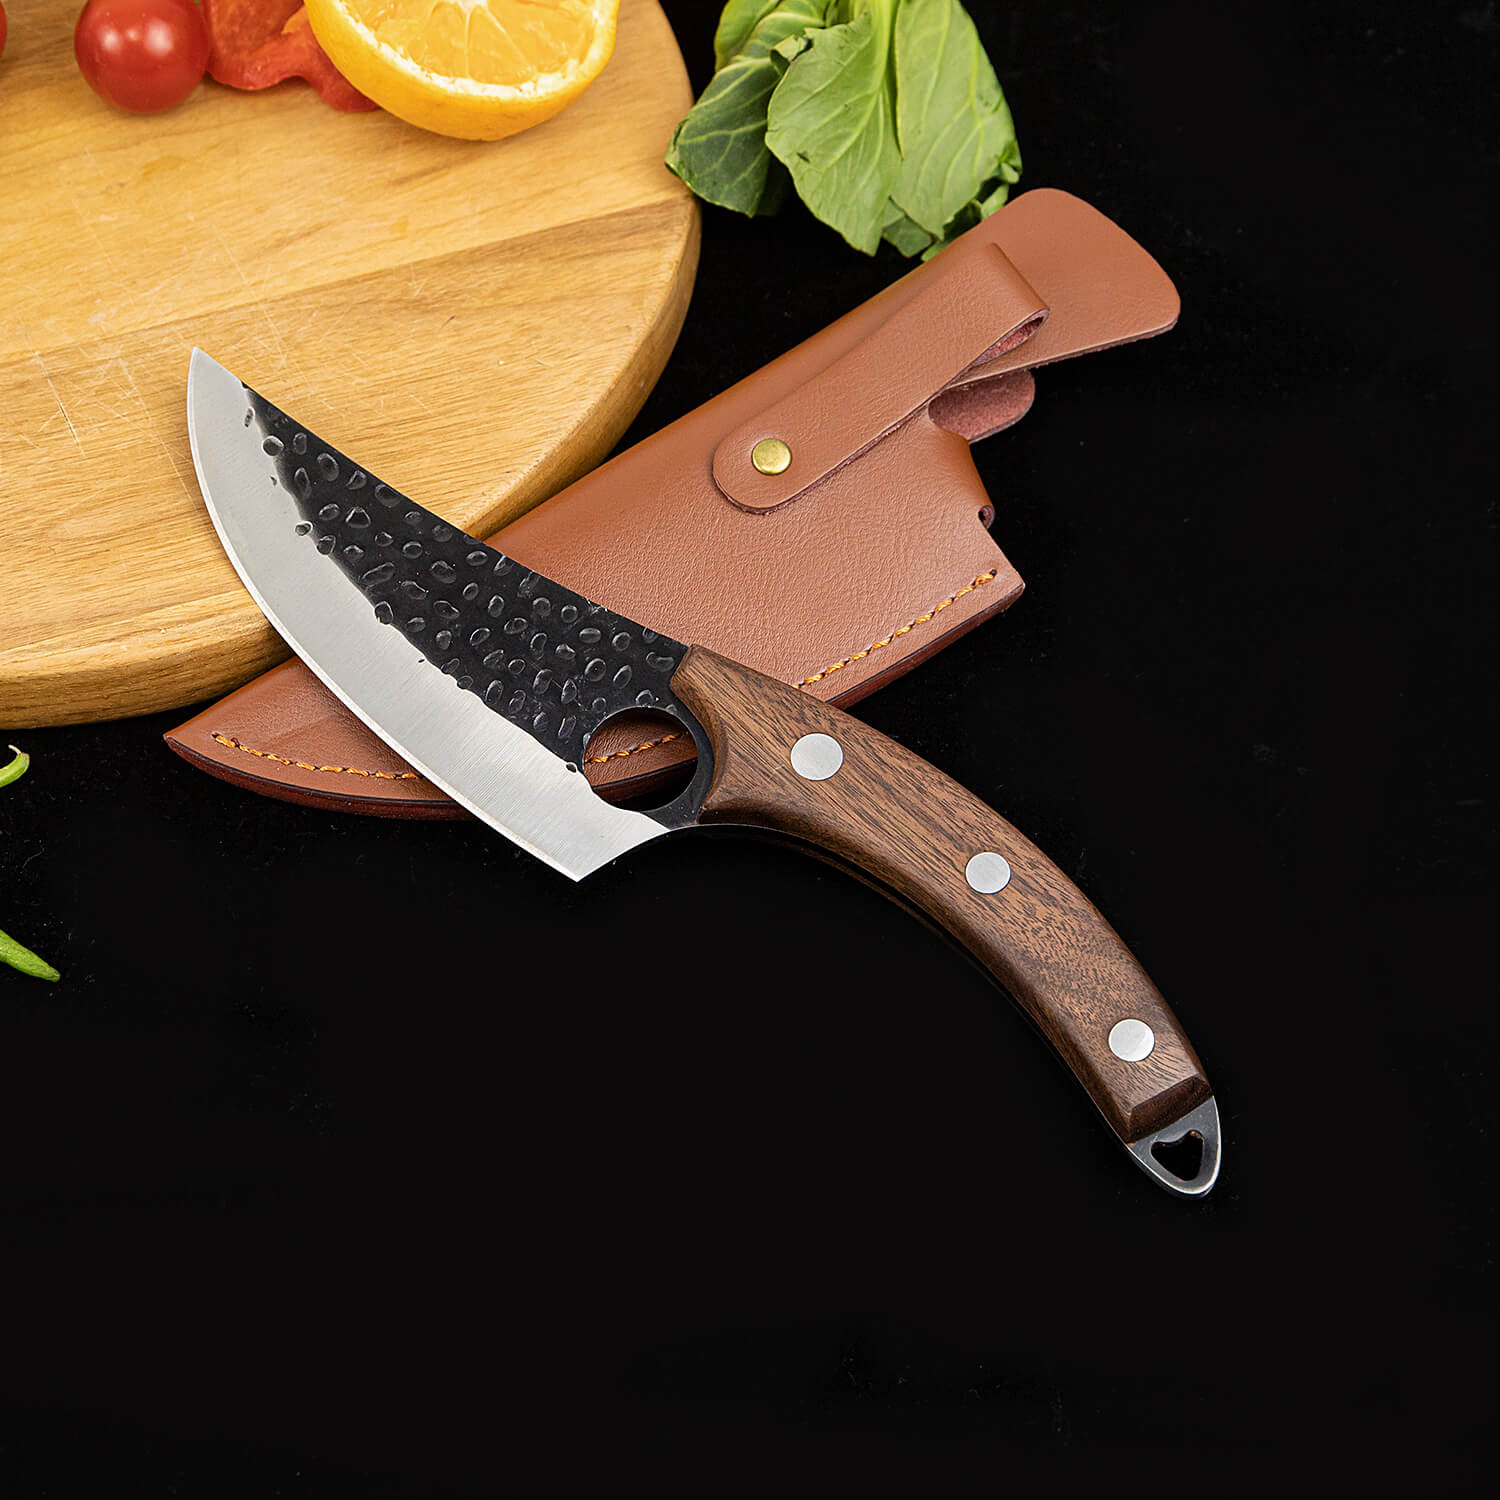 Kyodai Utility Kitchen Knife